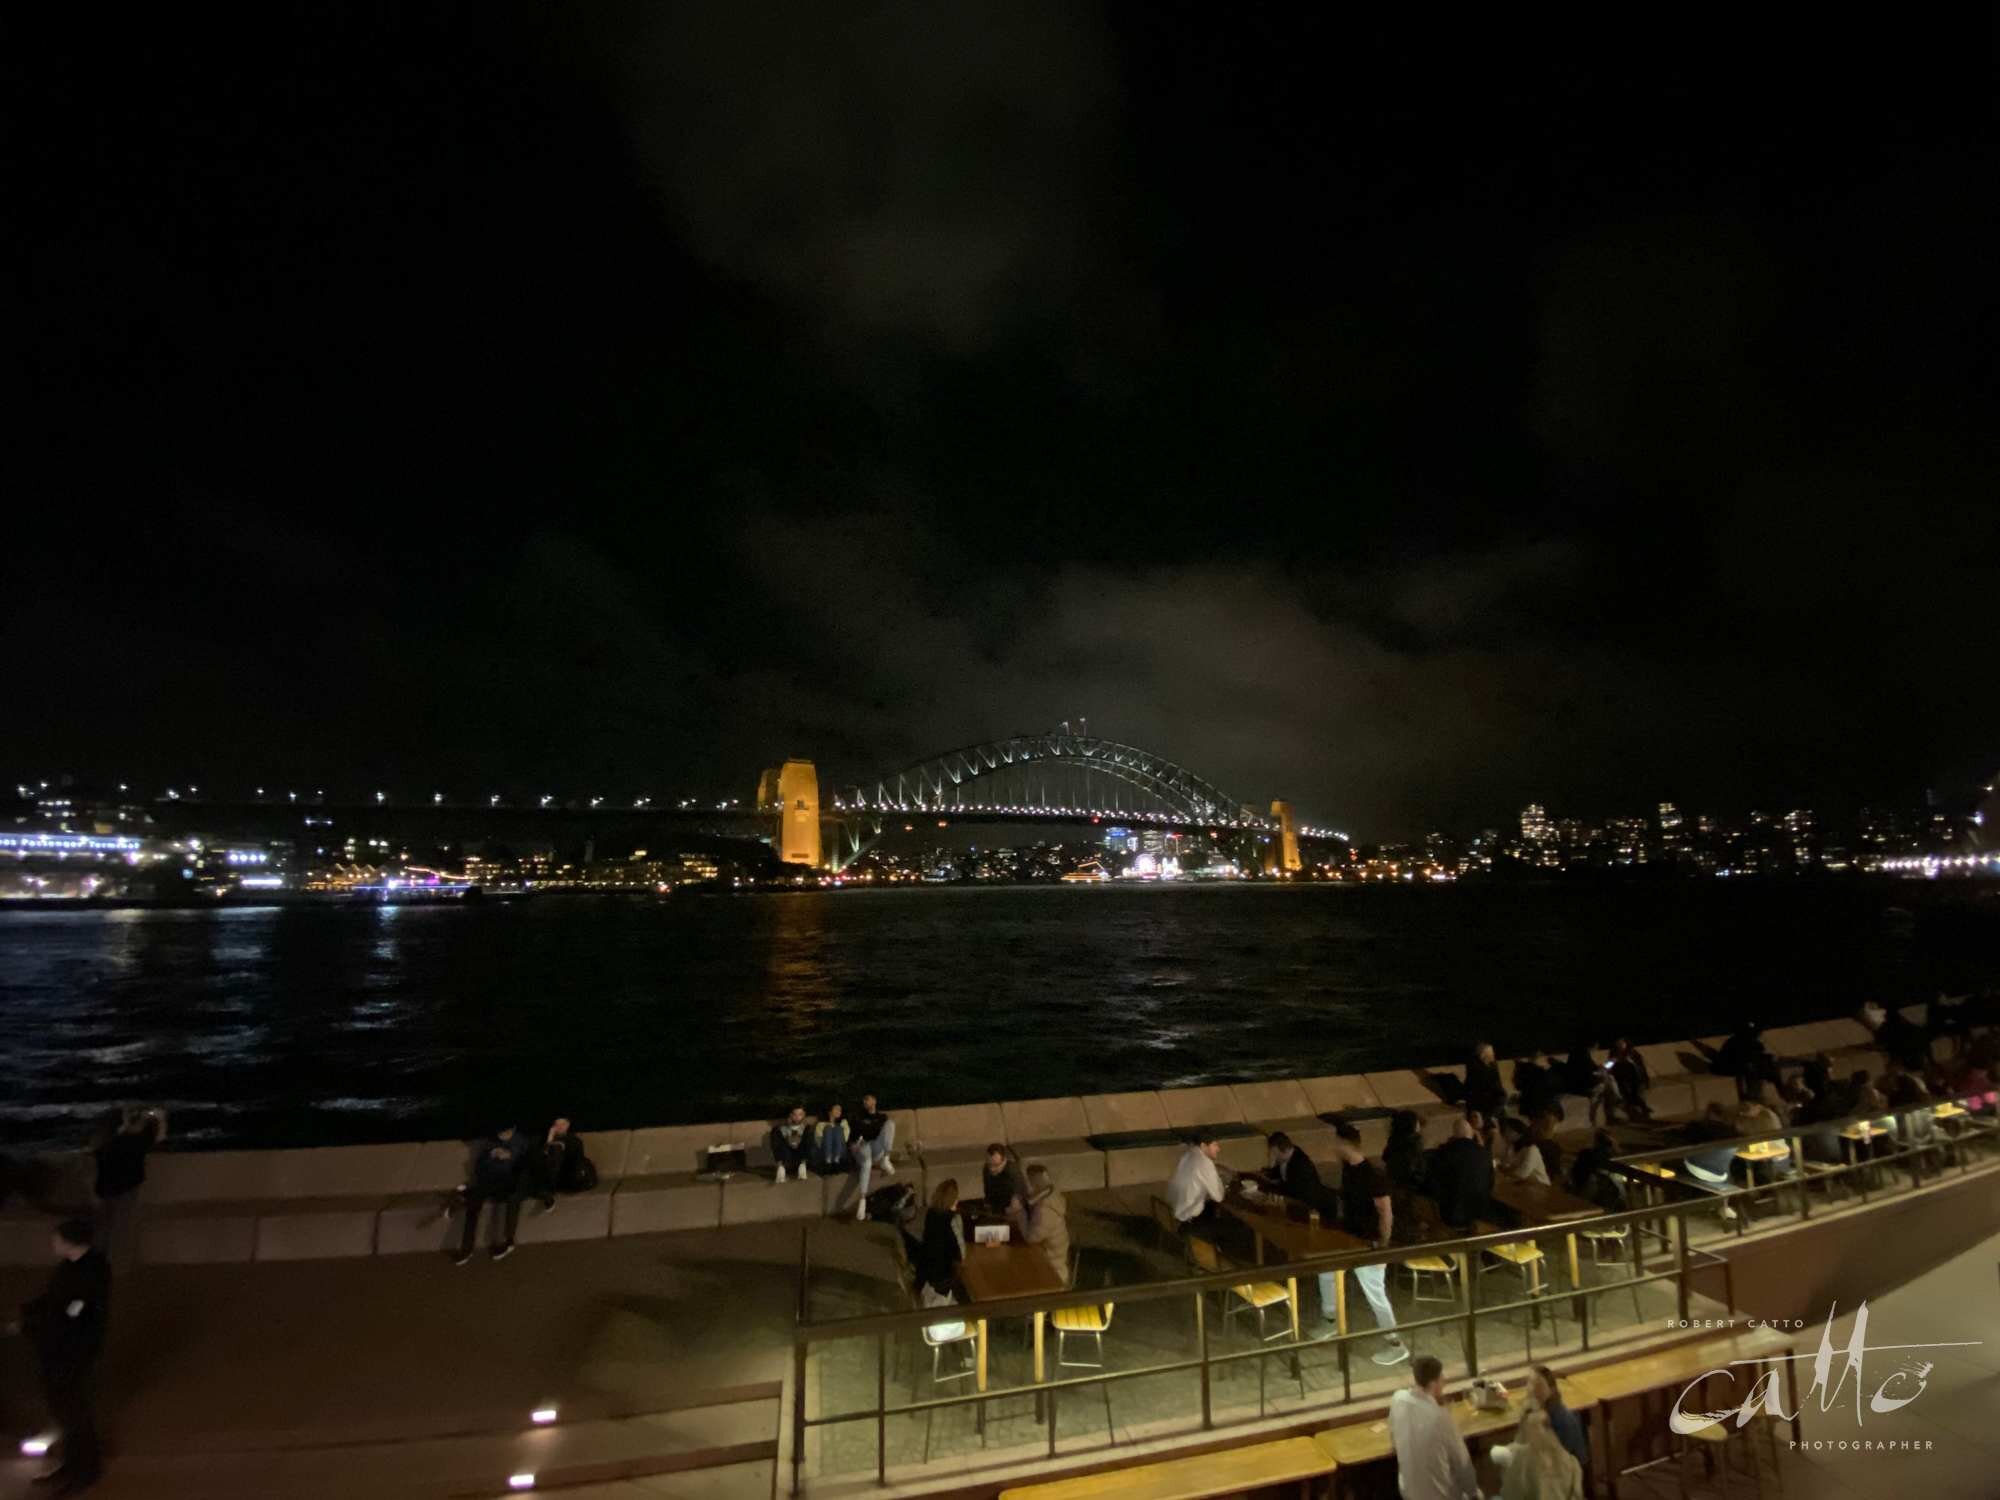 Sydney Harbour Bridge at night (0.5x wide angle lens)